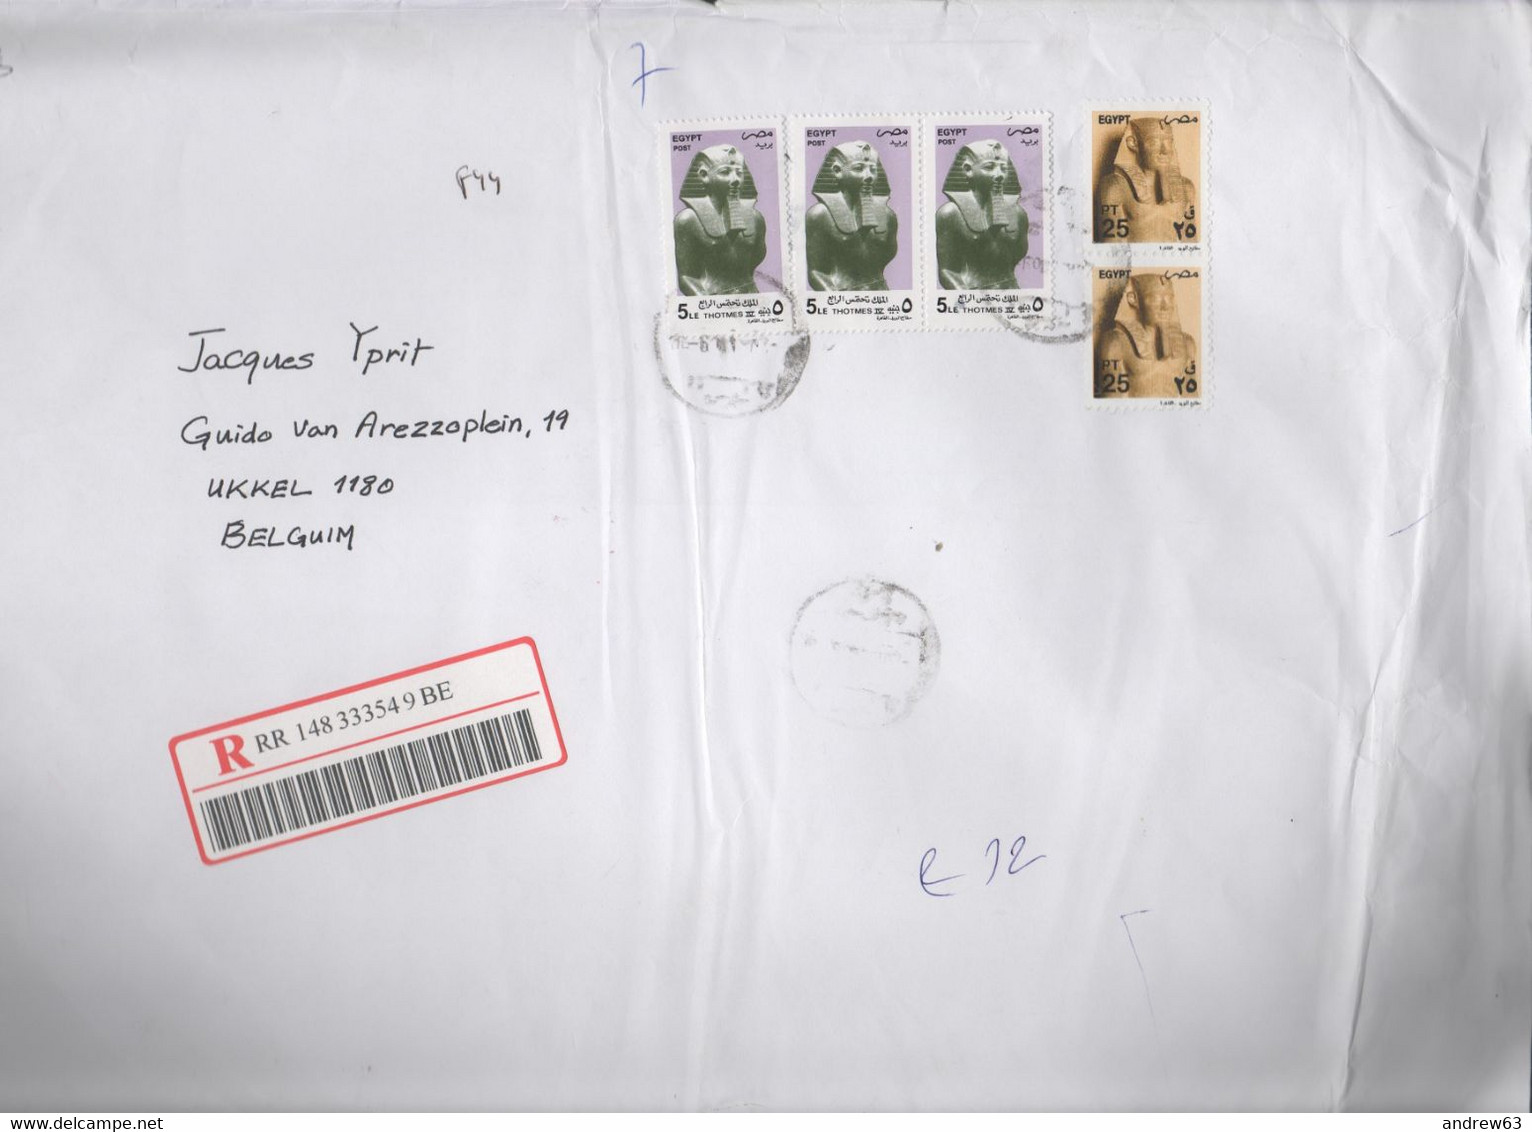 EGITTO - EGYPTE - Egypt - 2006 - 3 X 5 + 2 X 25 - Registered - Big Envelope -Viaggiata Da Alexandria Per Ukkel,Bruxelles - Briefe U. Dokumente